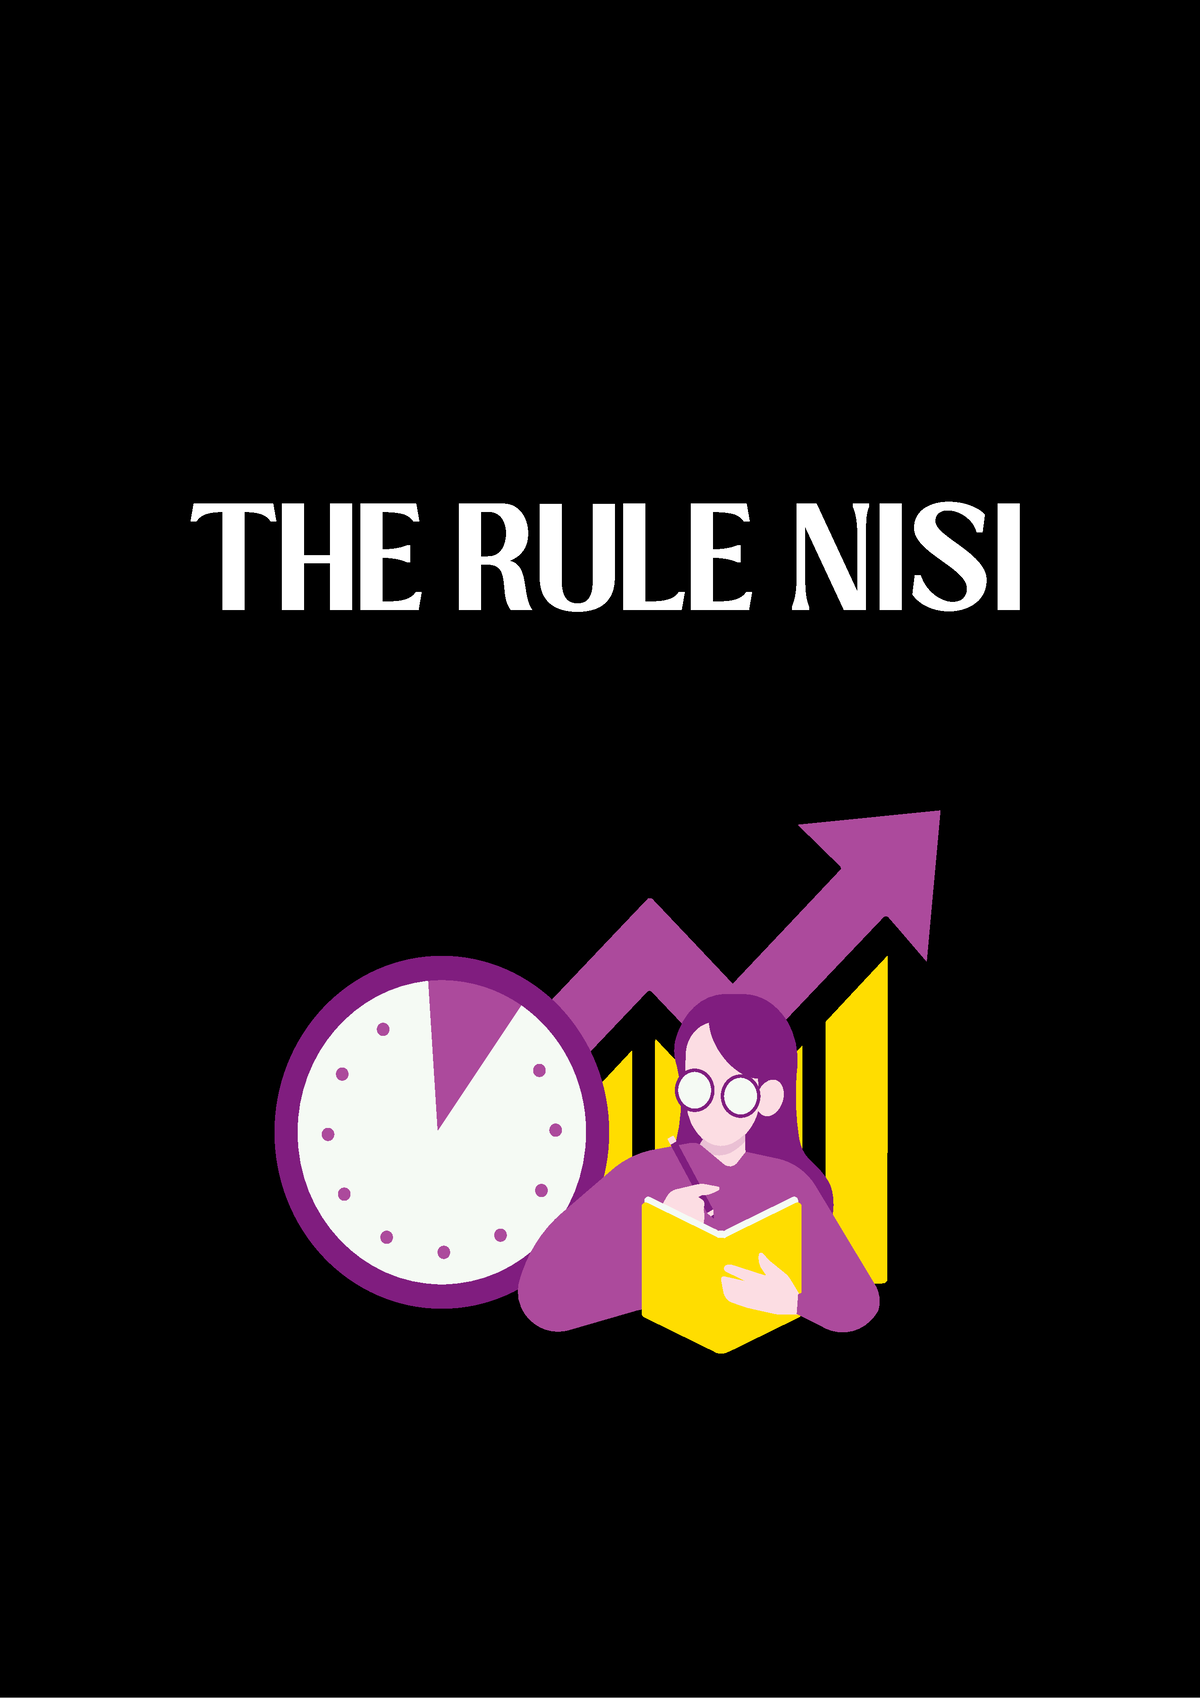 THE RULE NISI 1691141363 THE RULE NISI A rule nisi is a court order